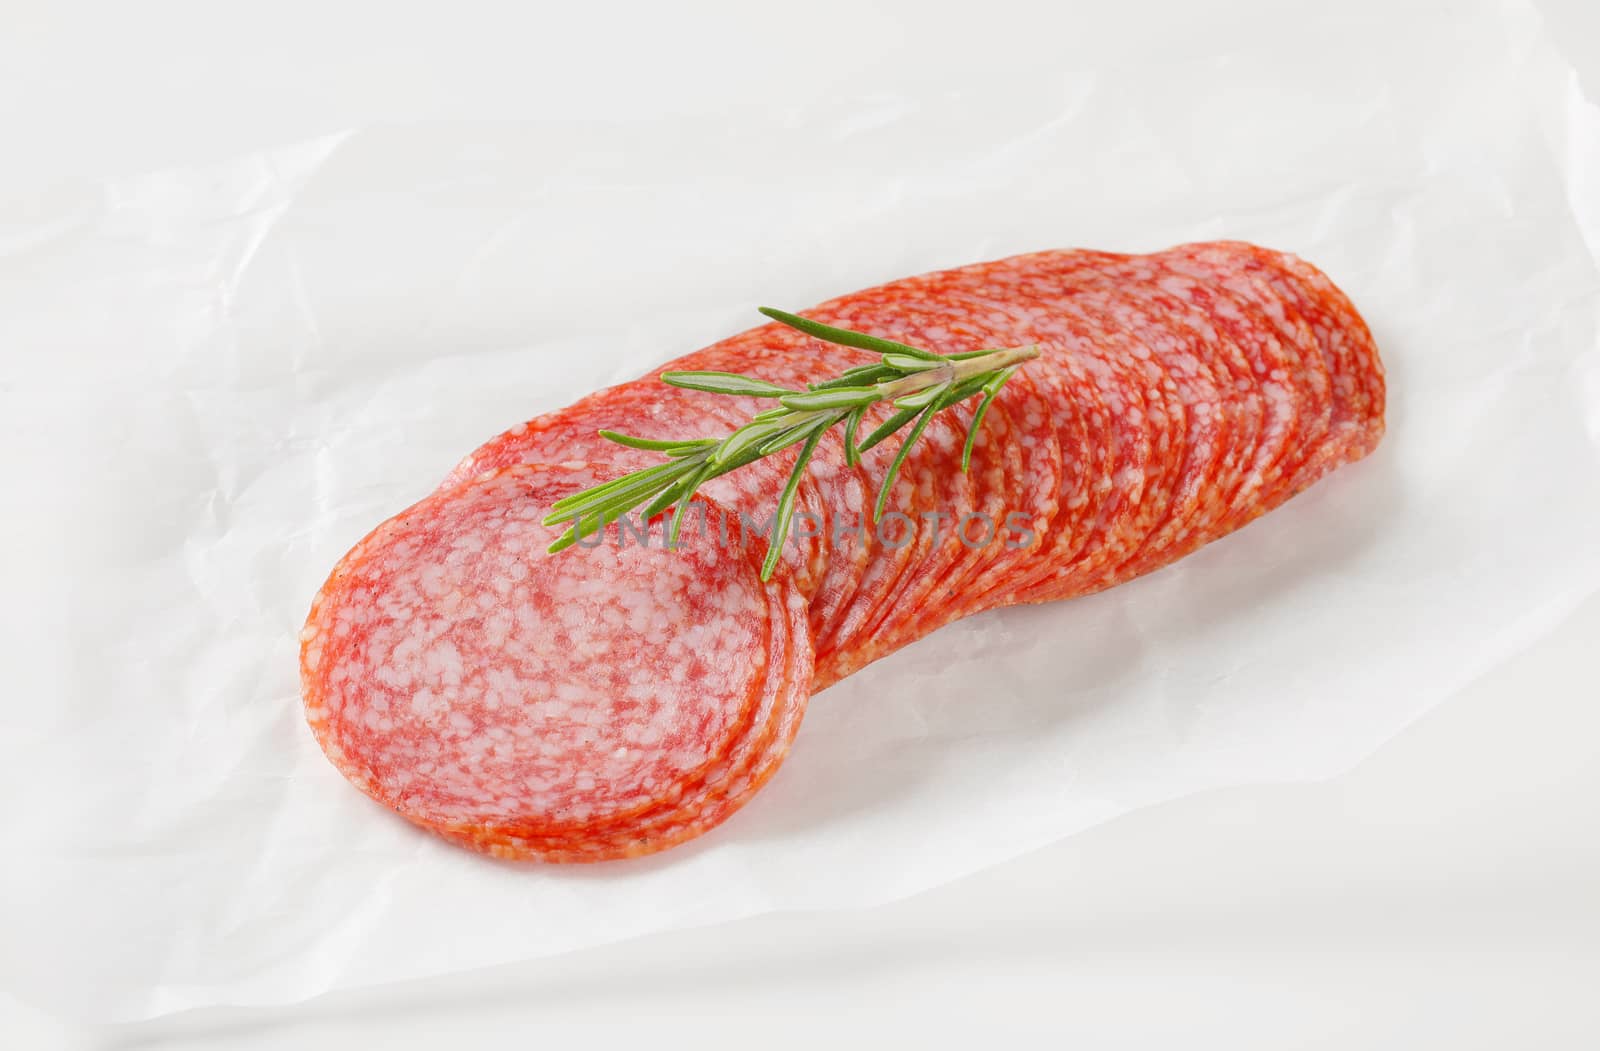 Sliced salami sausage by Digifoodstock